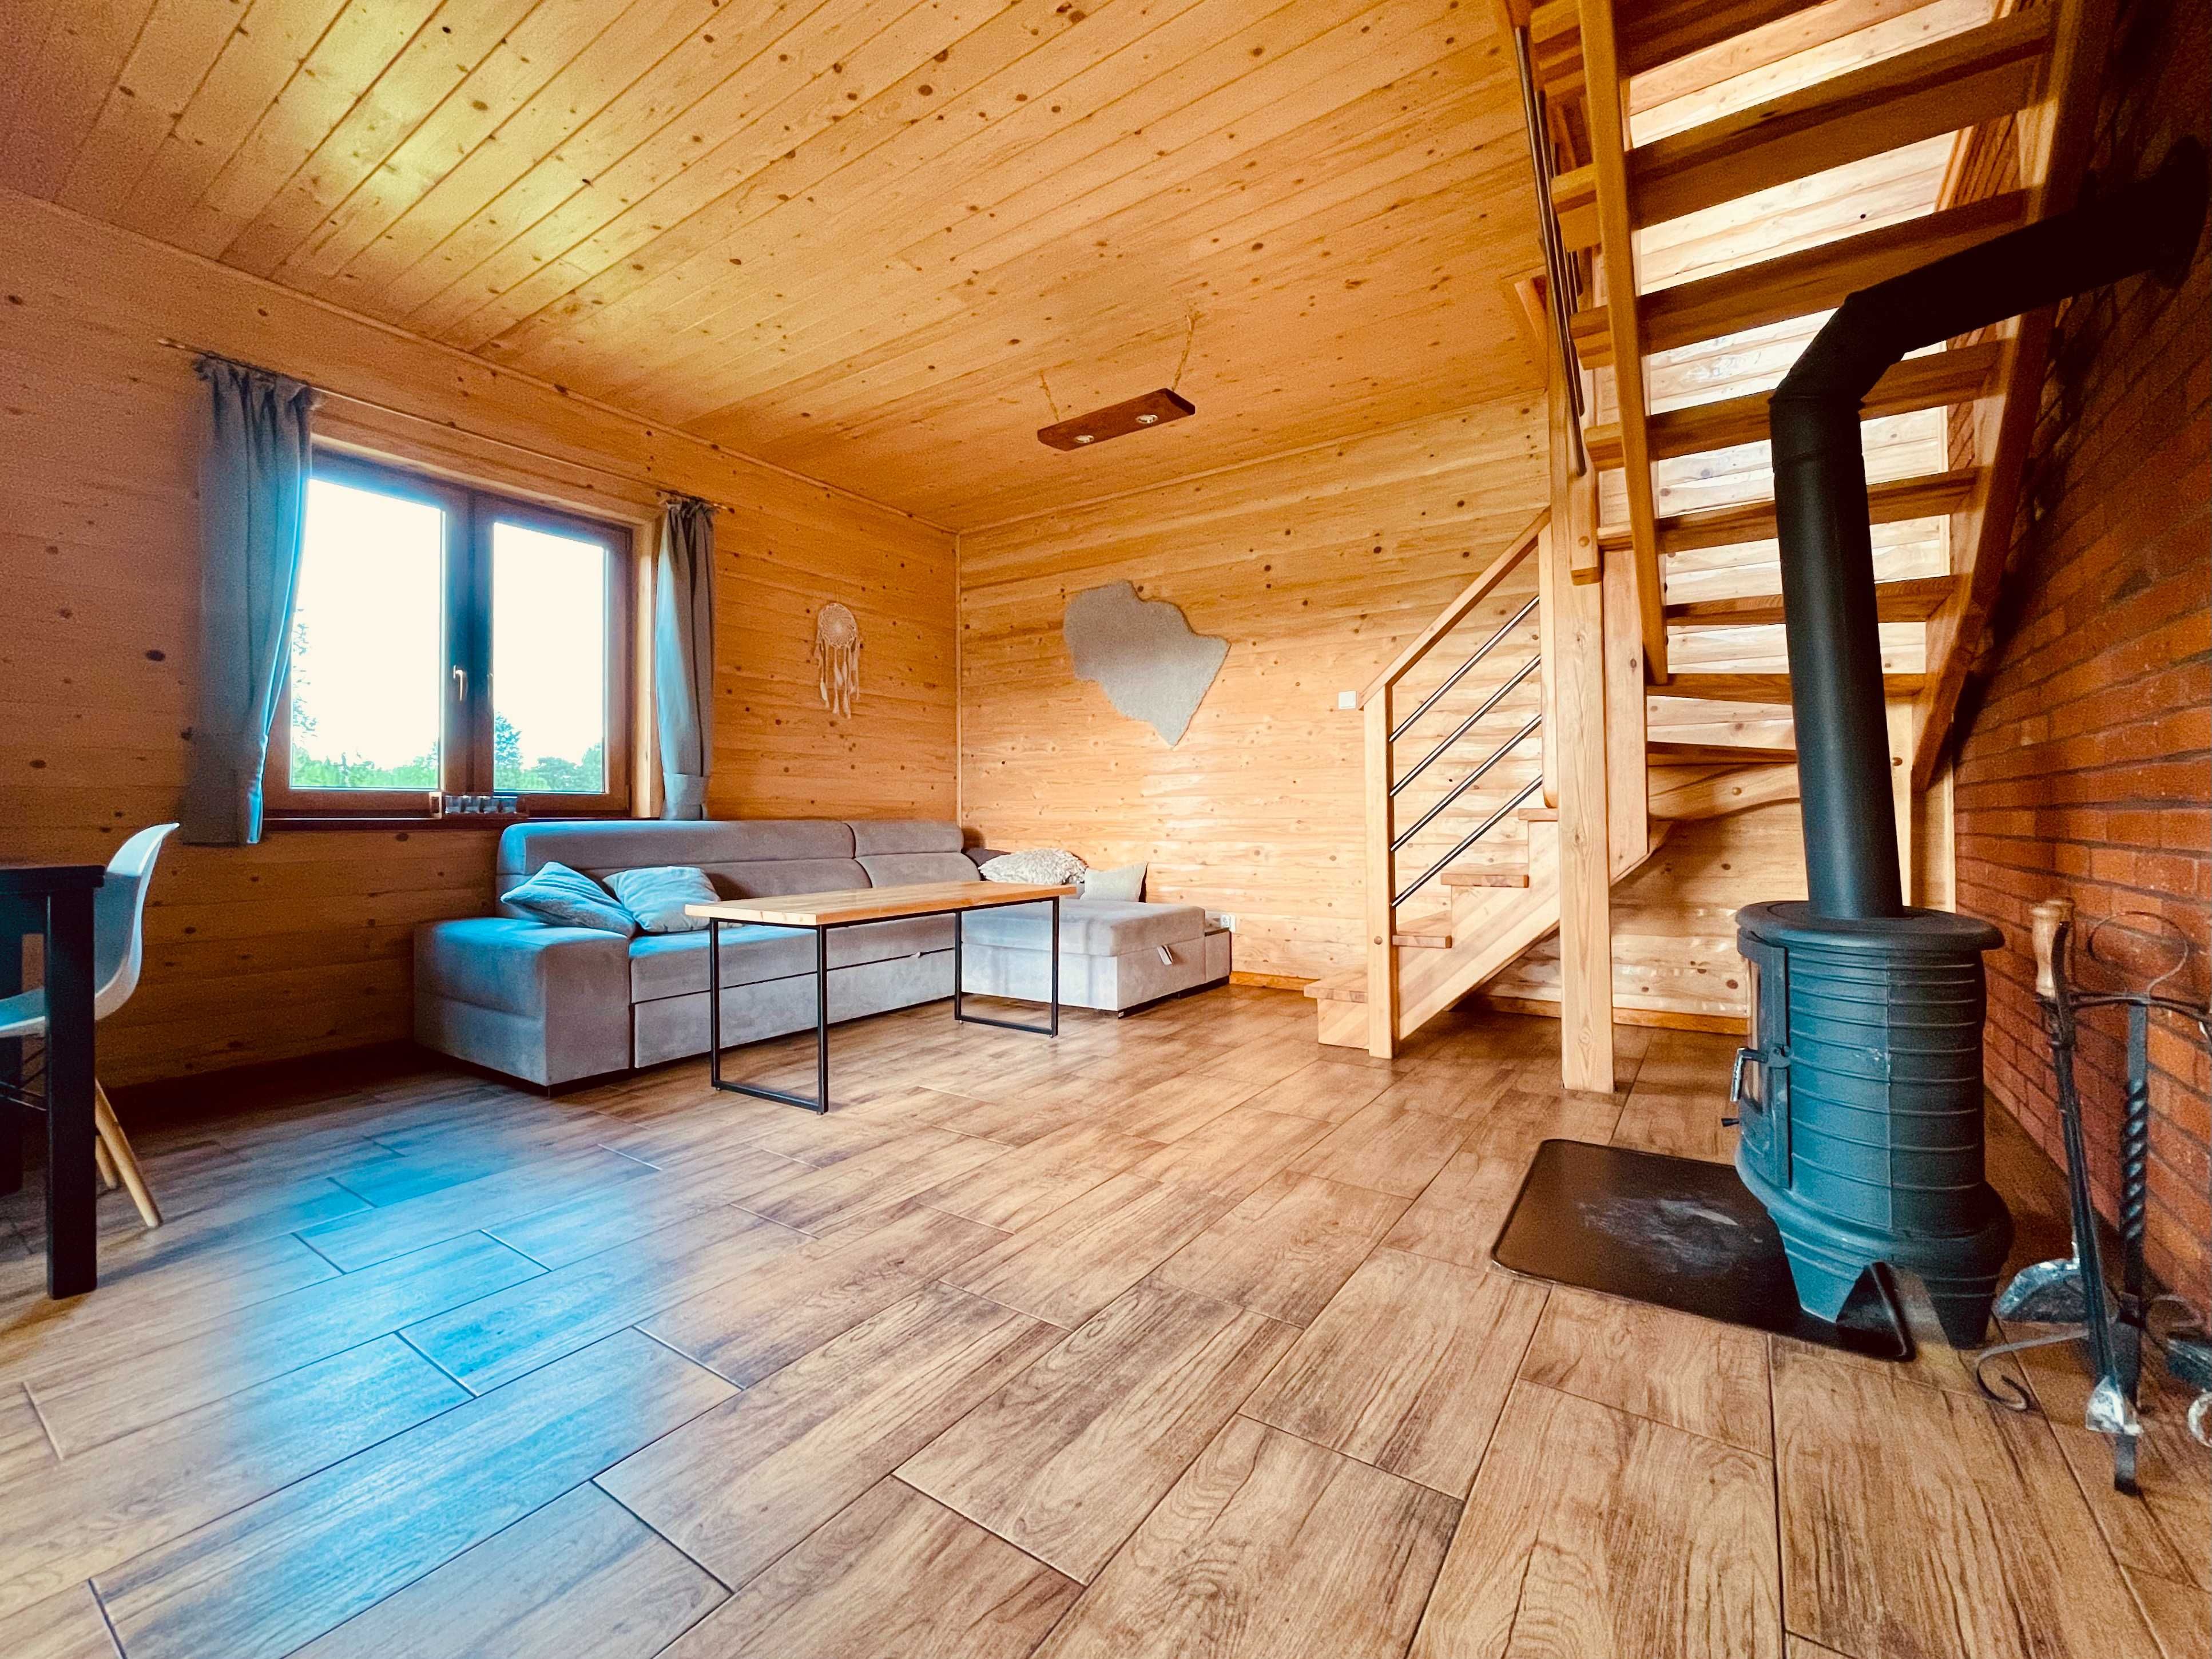 Dom całoroczny nad jeziorem,spokojna okolica,sauna